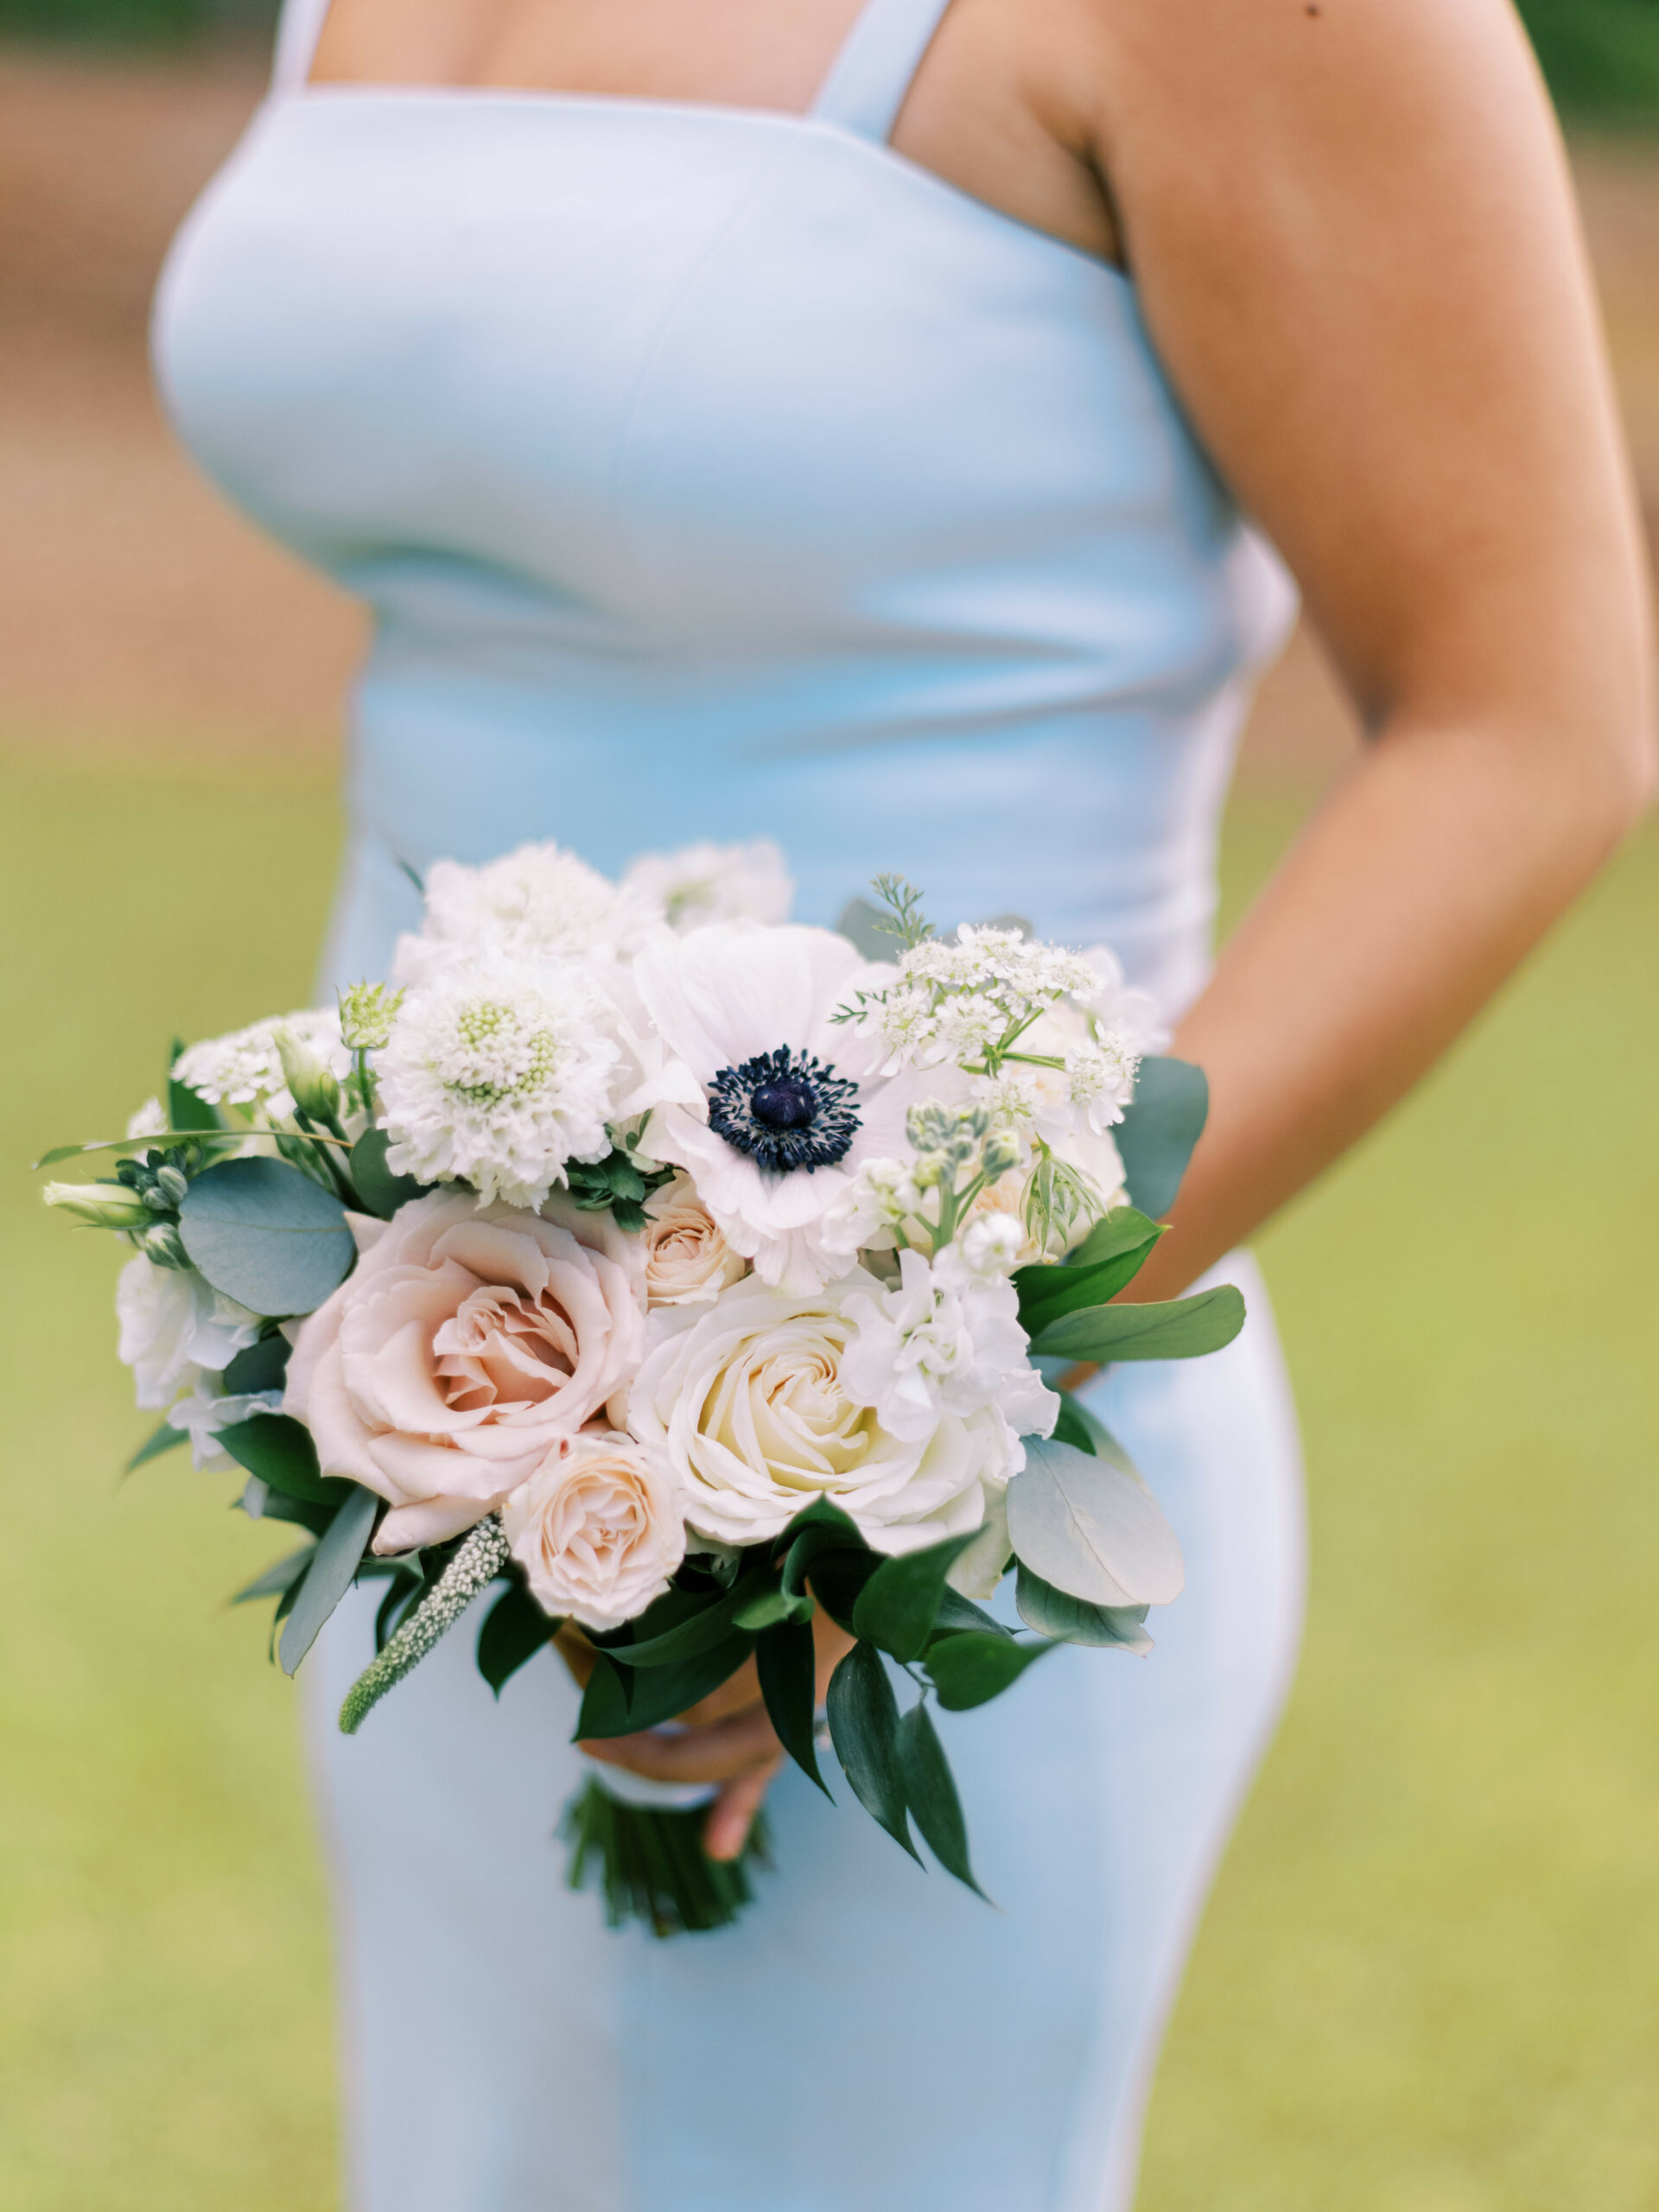 light blue bridesmaids dress holding white bouquet